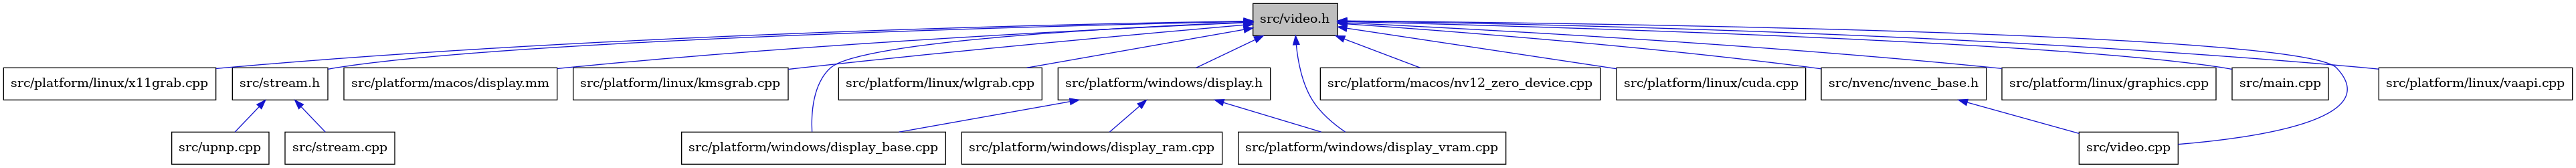 digraph {
    graph [bgcolor="#00000000"]
    node [shape=rectangle style=filled fillcolor="#FFFFFF" font=Helvetica padding=2]
    edge [color="#1414CE"]
    "19" [label="src/upnp.cpp" tooltip="src/upnp.cpp"]
    "10" [label="src/platform/linux/x11grab.cpp" tooltip="src/platform/linux/x11grab.cpp"]
    "17" [label="src/stream.h" tooltip="src/stream.h"]
    "11" [label="src/platform/macos/display.mm" tooltip="src/platform/macos/display.mm"]
    "7" [label="src/platform/linux/kmsgrab.cpp" tooltip="src/platform/linux/kmsgrab.cpp"]
    "3" [label="src/nvenc/nvenc_base.h" tooltip="src/nvenc/nvenc_base.h"]
    "9" [label="src/platform/linux/wlgrab.cpp" tooltip="src/platform/linux/wlgrab.cpp"]
    "13" [label="src/platform/windows/display.h" tooltip="src/platform/windows/display.h"]
    "15" [label="src/platform/windows/display_base.cpp" tooltip="src/platform/windows/display_base.cpp"]
    "12" [label="src/platform/macos/nv12_zero_device.cpp" tooltip="src/platform/macos/nv12_zero_device.cpp"]
    "6" [label="src/platform/linux/cuda.cpp" tooltip="src/platform/linux/cuda.cpp"]
    "16" [label="src/platform/windows/display_vram.cpp" tooltip="src/platform/windows/display_vram.cpp"]
    "1" [label="src/video.h" tooltip="src/video.h" fillcolor="#BFBFBF"]
    "5" [label="src/platform/linux/graphics.cpp" tooltip="src/platform/linux/graphics.cpp"]
    "18" [label="src/stream.cpp" tooltip="src/stream.cpp"]
    "14" [label="src/platform/windows/display_ram.cpp" tooltip="src/platform/windows/display_ram.cpp"]
    "2" [label="src/main.cpp" tooltip="src/main.cpp"]
    "4" [label="src/video.cpp" tooltip="src/video.cpp"]
    "8" [label="src/platform/linux/vaapi.cpp" tooltip="src/platform/linux/vaapi.cpp"]
    "17" -> "18" [dir=back tooltip="include"]
    "17" -> "19" [dir=back tooltip="include"]
    "3" -> "4" [dir=back tooltip="include"]
    "13" -> "14" [dir=back tooltip="include"]
    "13" -> "15" [dir=back tooltip="include"]
    "13" -> "16" [dir=back tooltip="include"]
    "1" -> "2" [dir=back tooltip="include"]
    "1" -> "3" [dir=back tooltip="include"]
    "1" -> "5" [dir=back tooltip="include"]
    "1" -> "6" [dir=back tooltip="include"]
    "1" -> "7" [dir=back tooltip="include"]
    "1" -> "8" [dir=back tooltip="include"]
    "1" -> "9" [dir=back tooltip="include"]
    "1" -> "10" [dir=back tooltip="include"]
    "1" -> "11" [dir=back tooltip="include"]
    "1" -> "12" [dir=back tooltip="include"]
    "1" -> "13" [dir=back tooltip="include"]
    "1" -> "15" [dir=back tooltip="include"]
    "1" -> "16" [dir=back tooltip="include"]
    "1" -> "17" [dir=back tooltip="include"]
    "1" -> "4" [dir=back tooltip="include"]
}